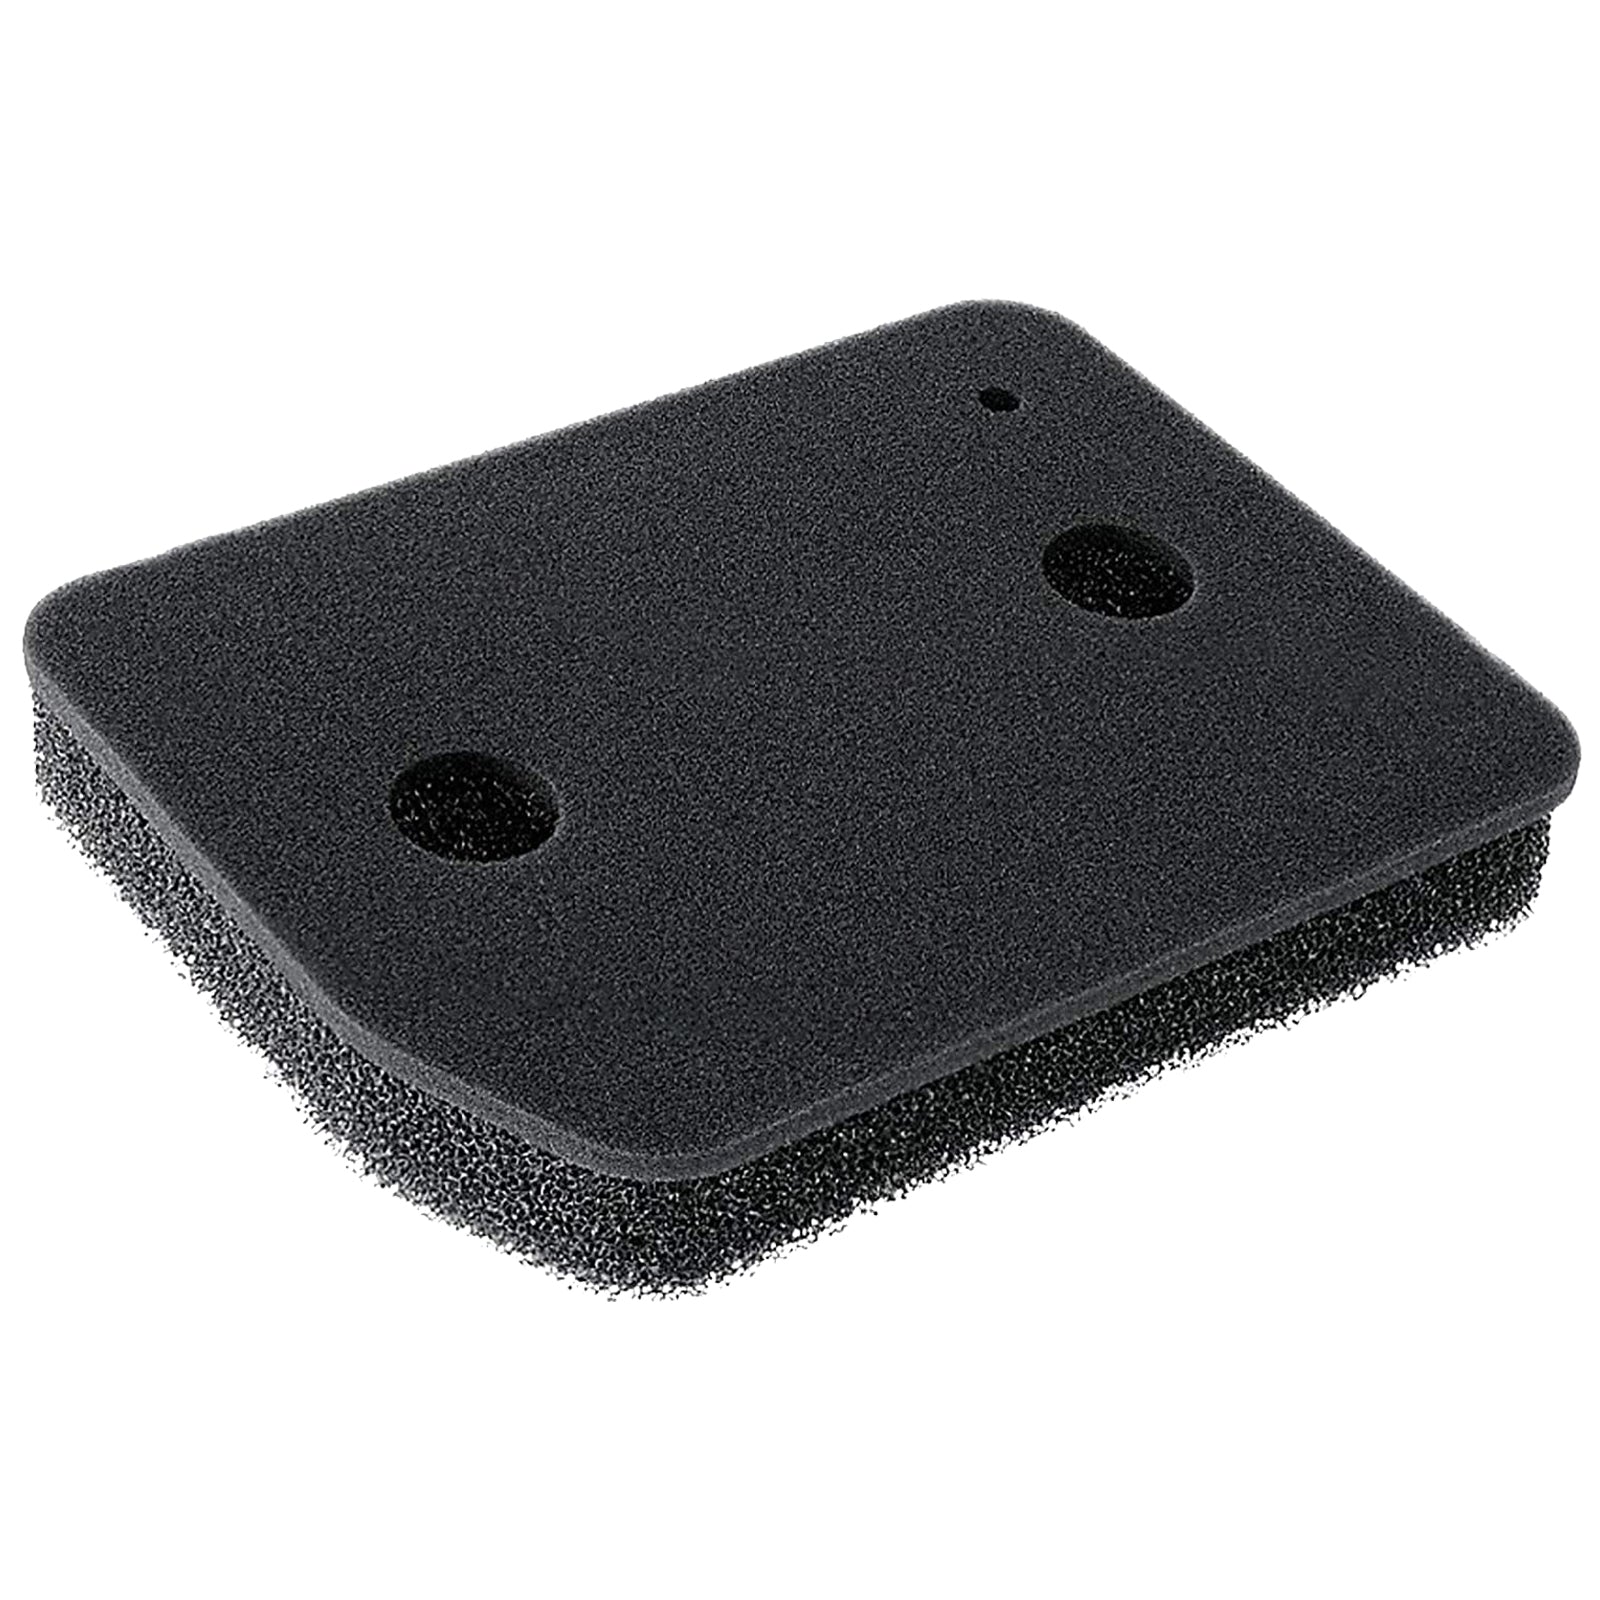 Condenser Module Foam Filter Sponge for MIELE Tumble Dryer x 2